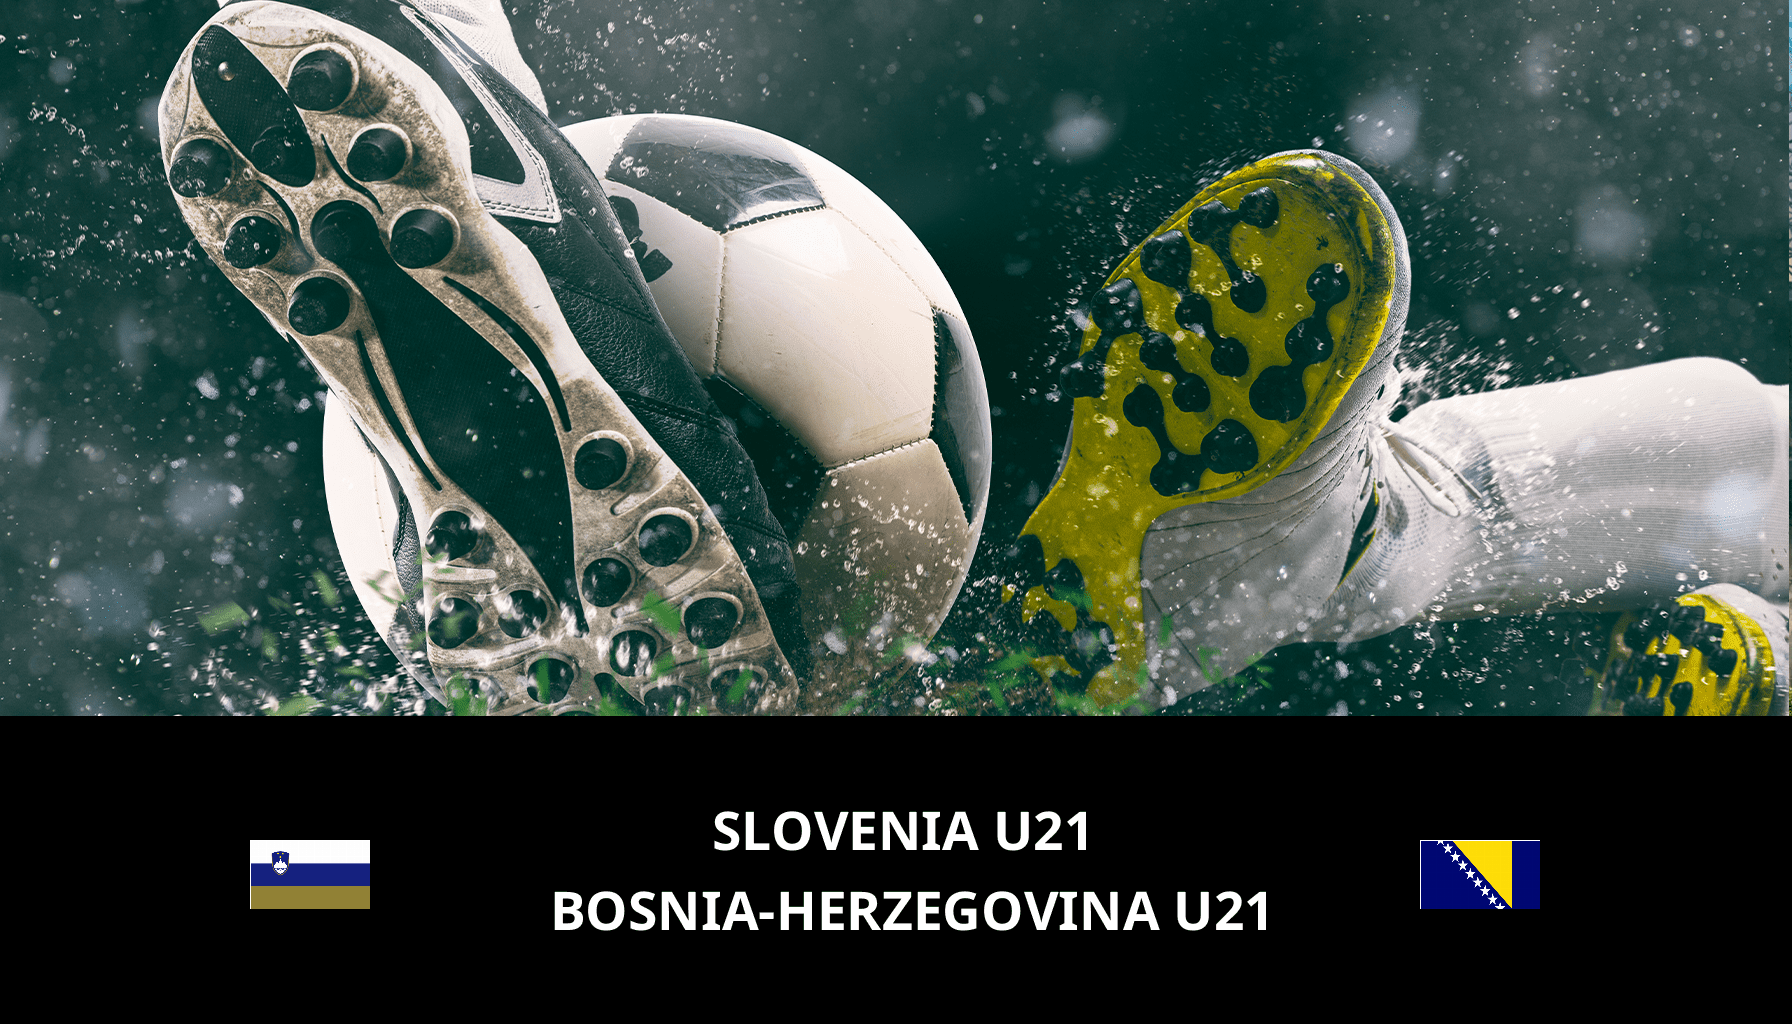 Prediction for Slovenia U21 VS Bosnia-Herzegovina U21 on 22/03/2024 Analysis of the match